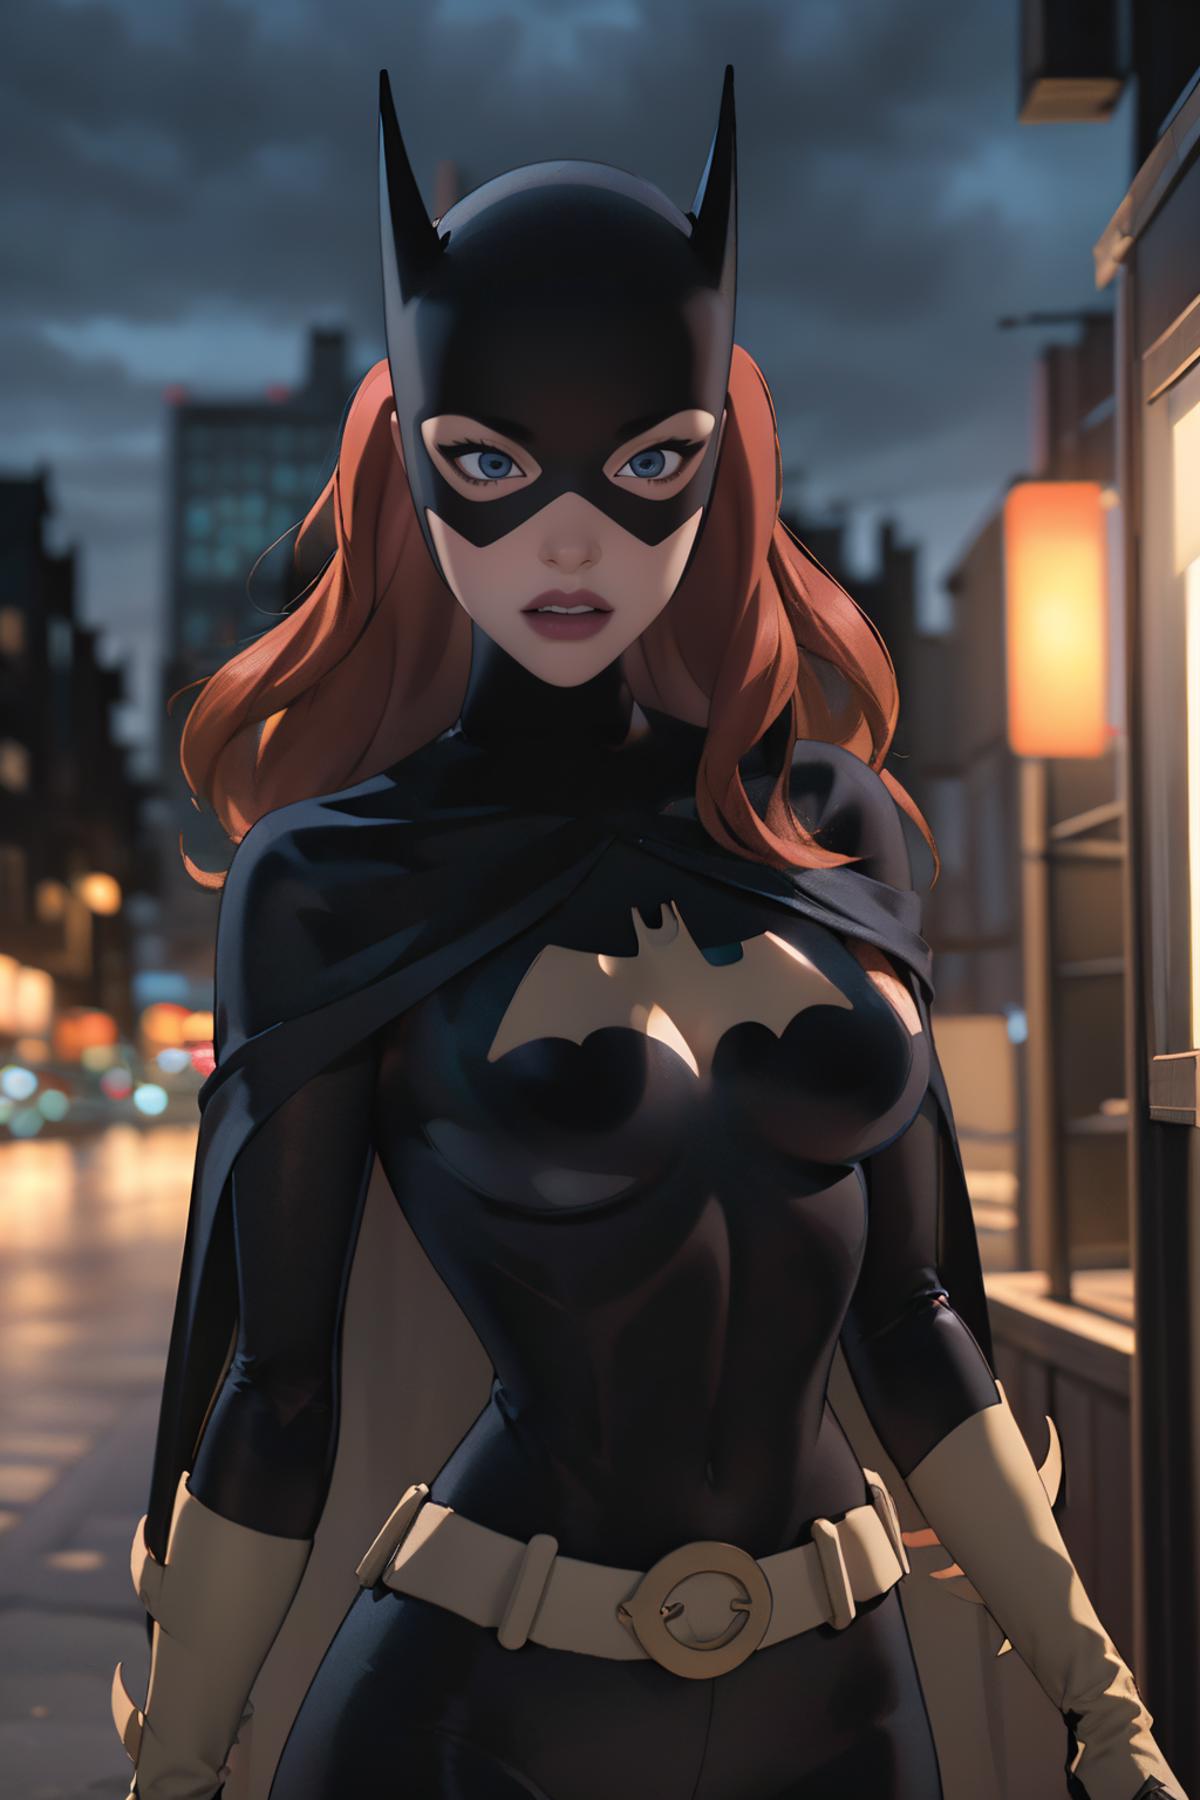 A cartoon depiction of a woman wearing a bat costume.